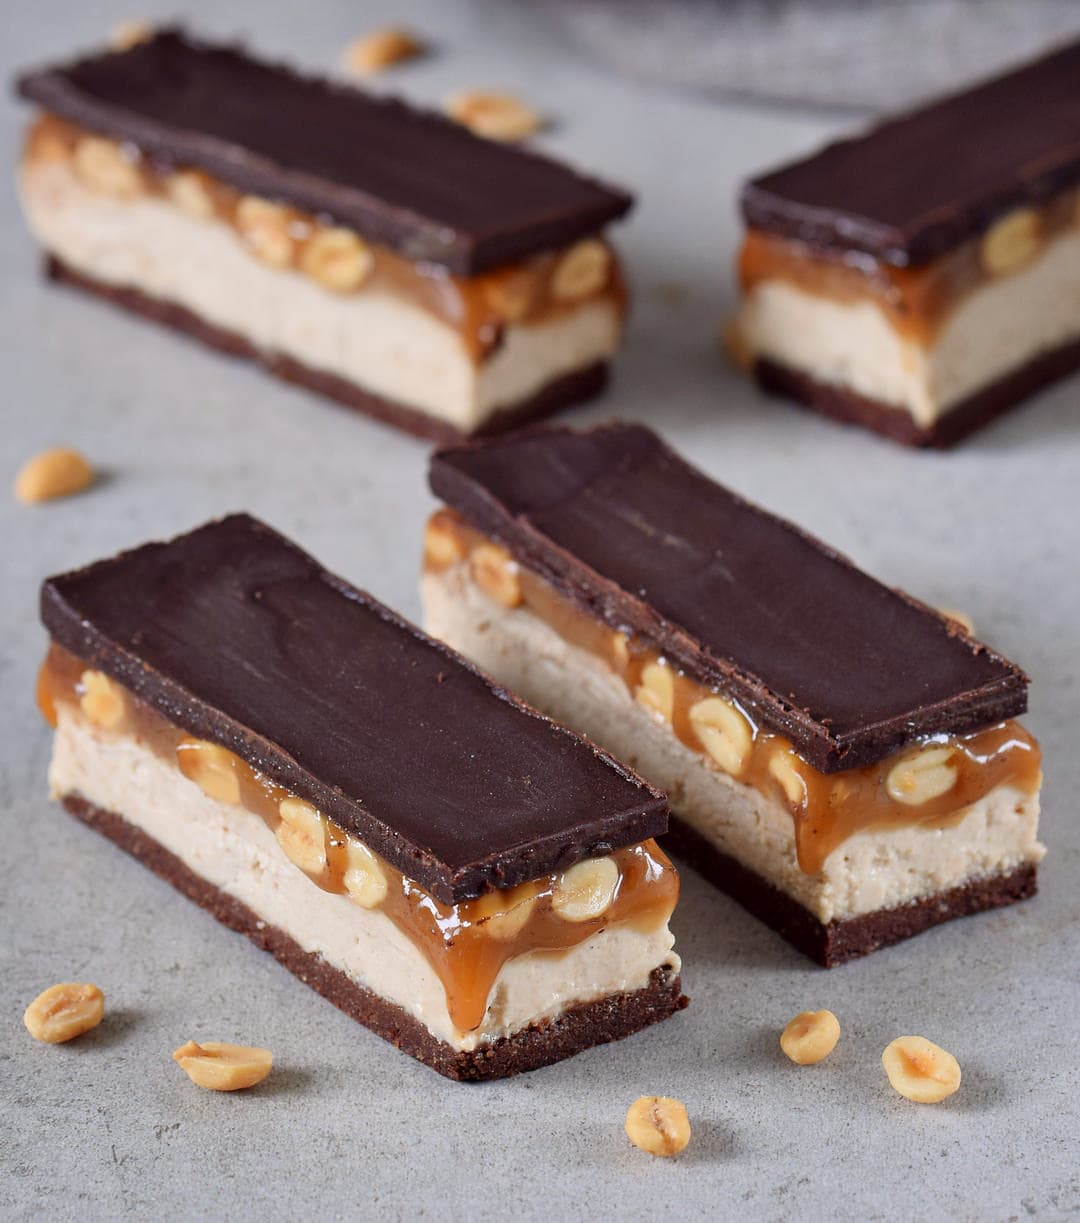 Peanut caramel chocolate bars with a brownie base and cashew cream